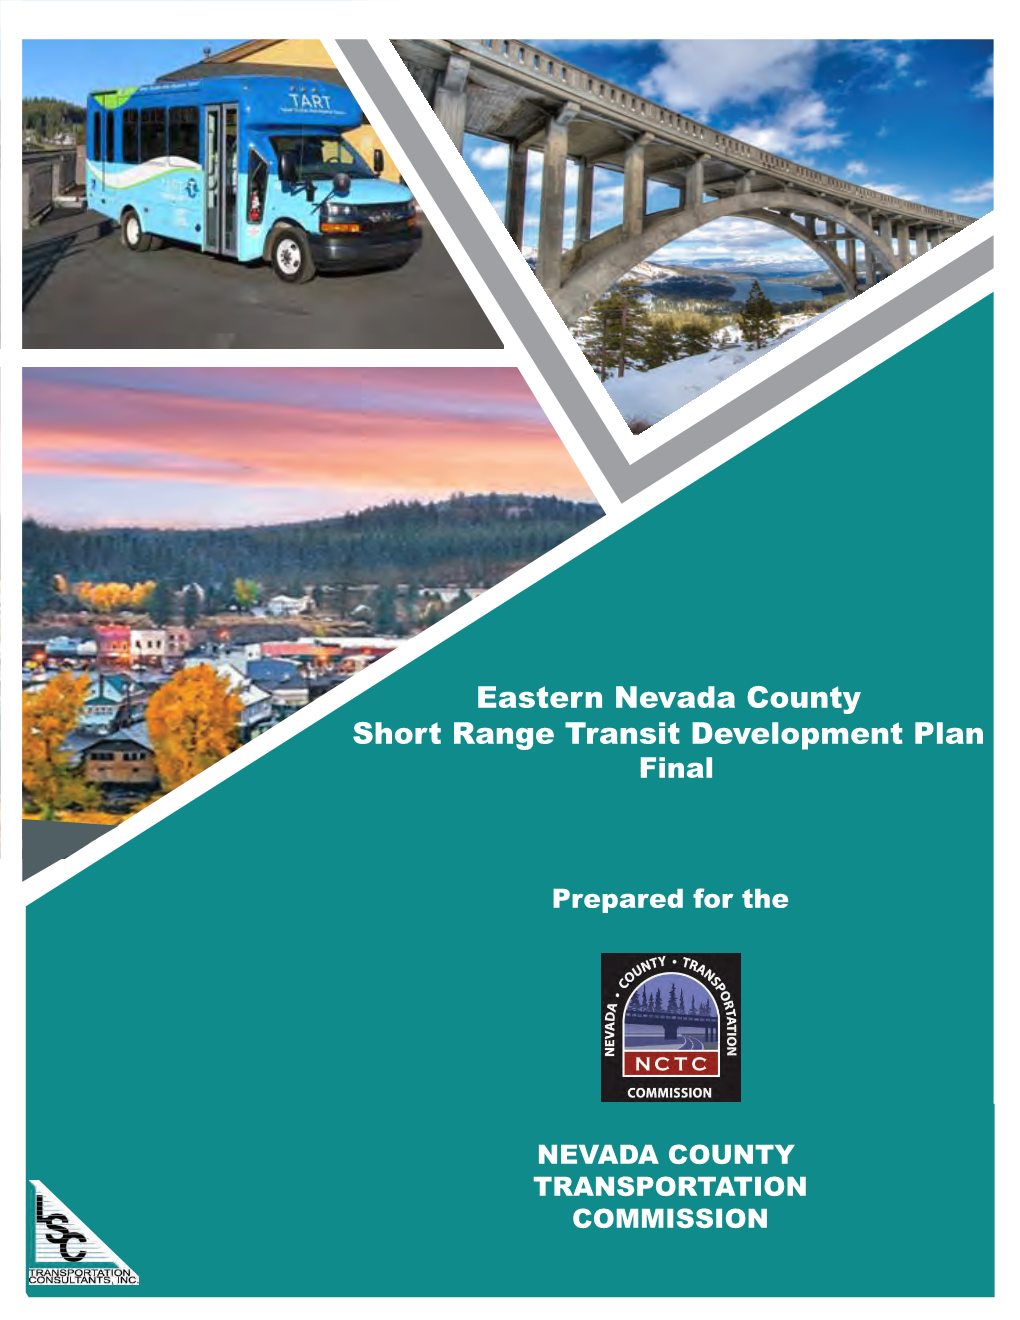 Eastern Nevada County Short Range Transit Development Plan Prere for Final The